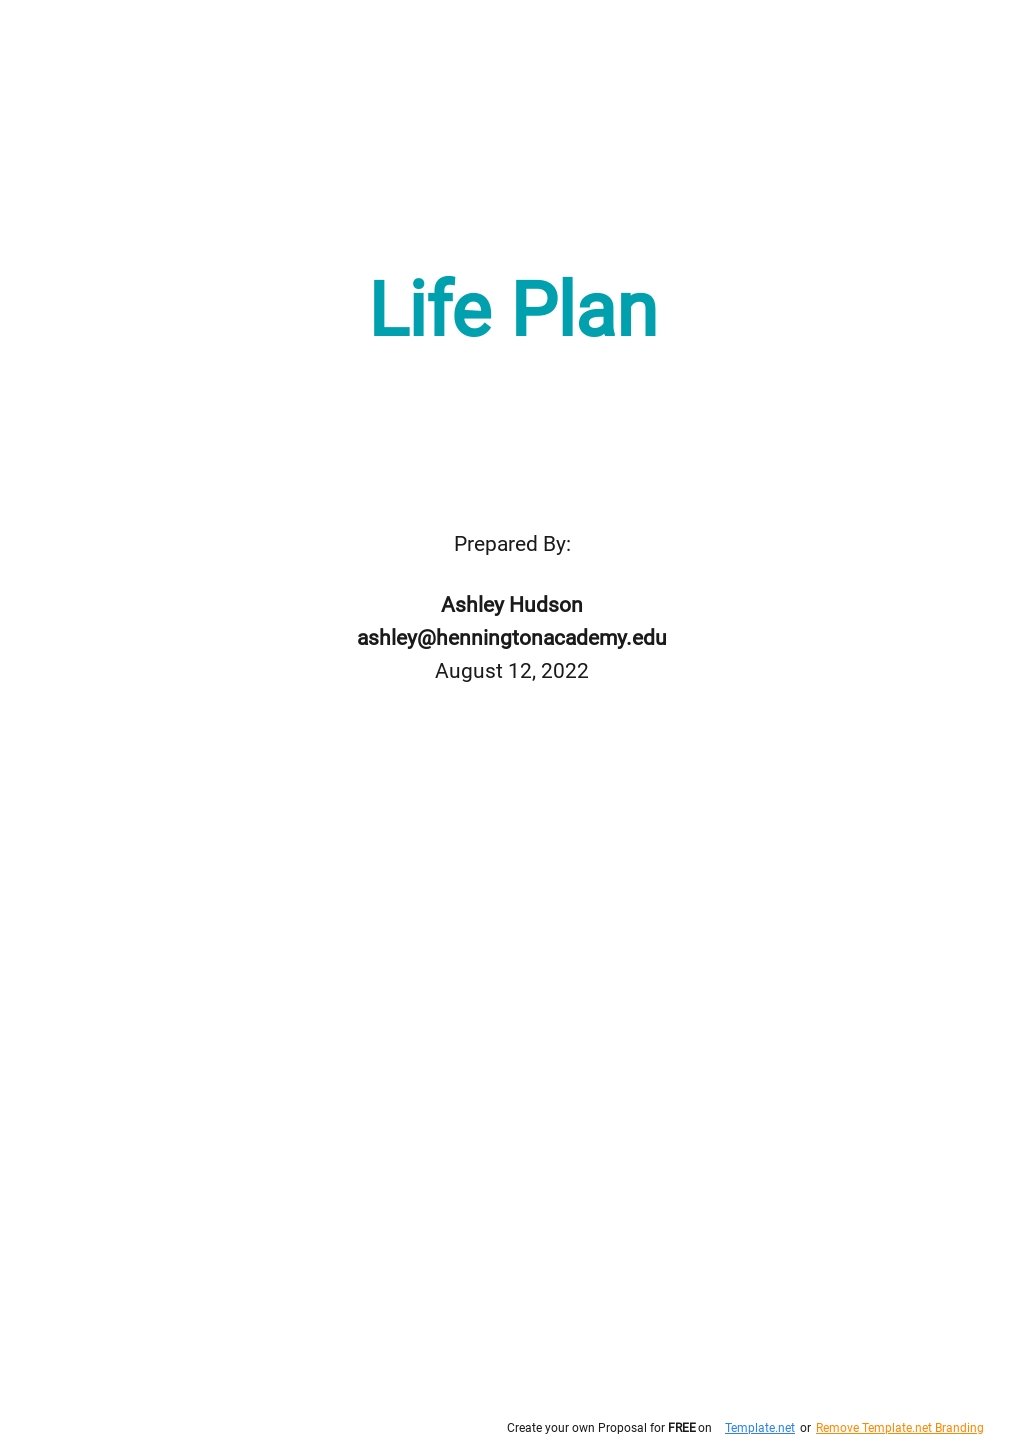 Life Plan Template.jpe